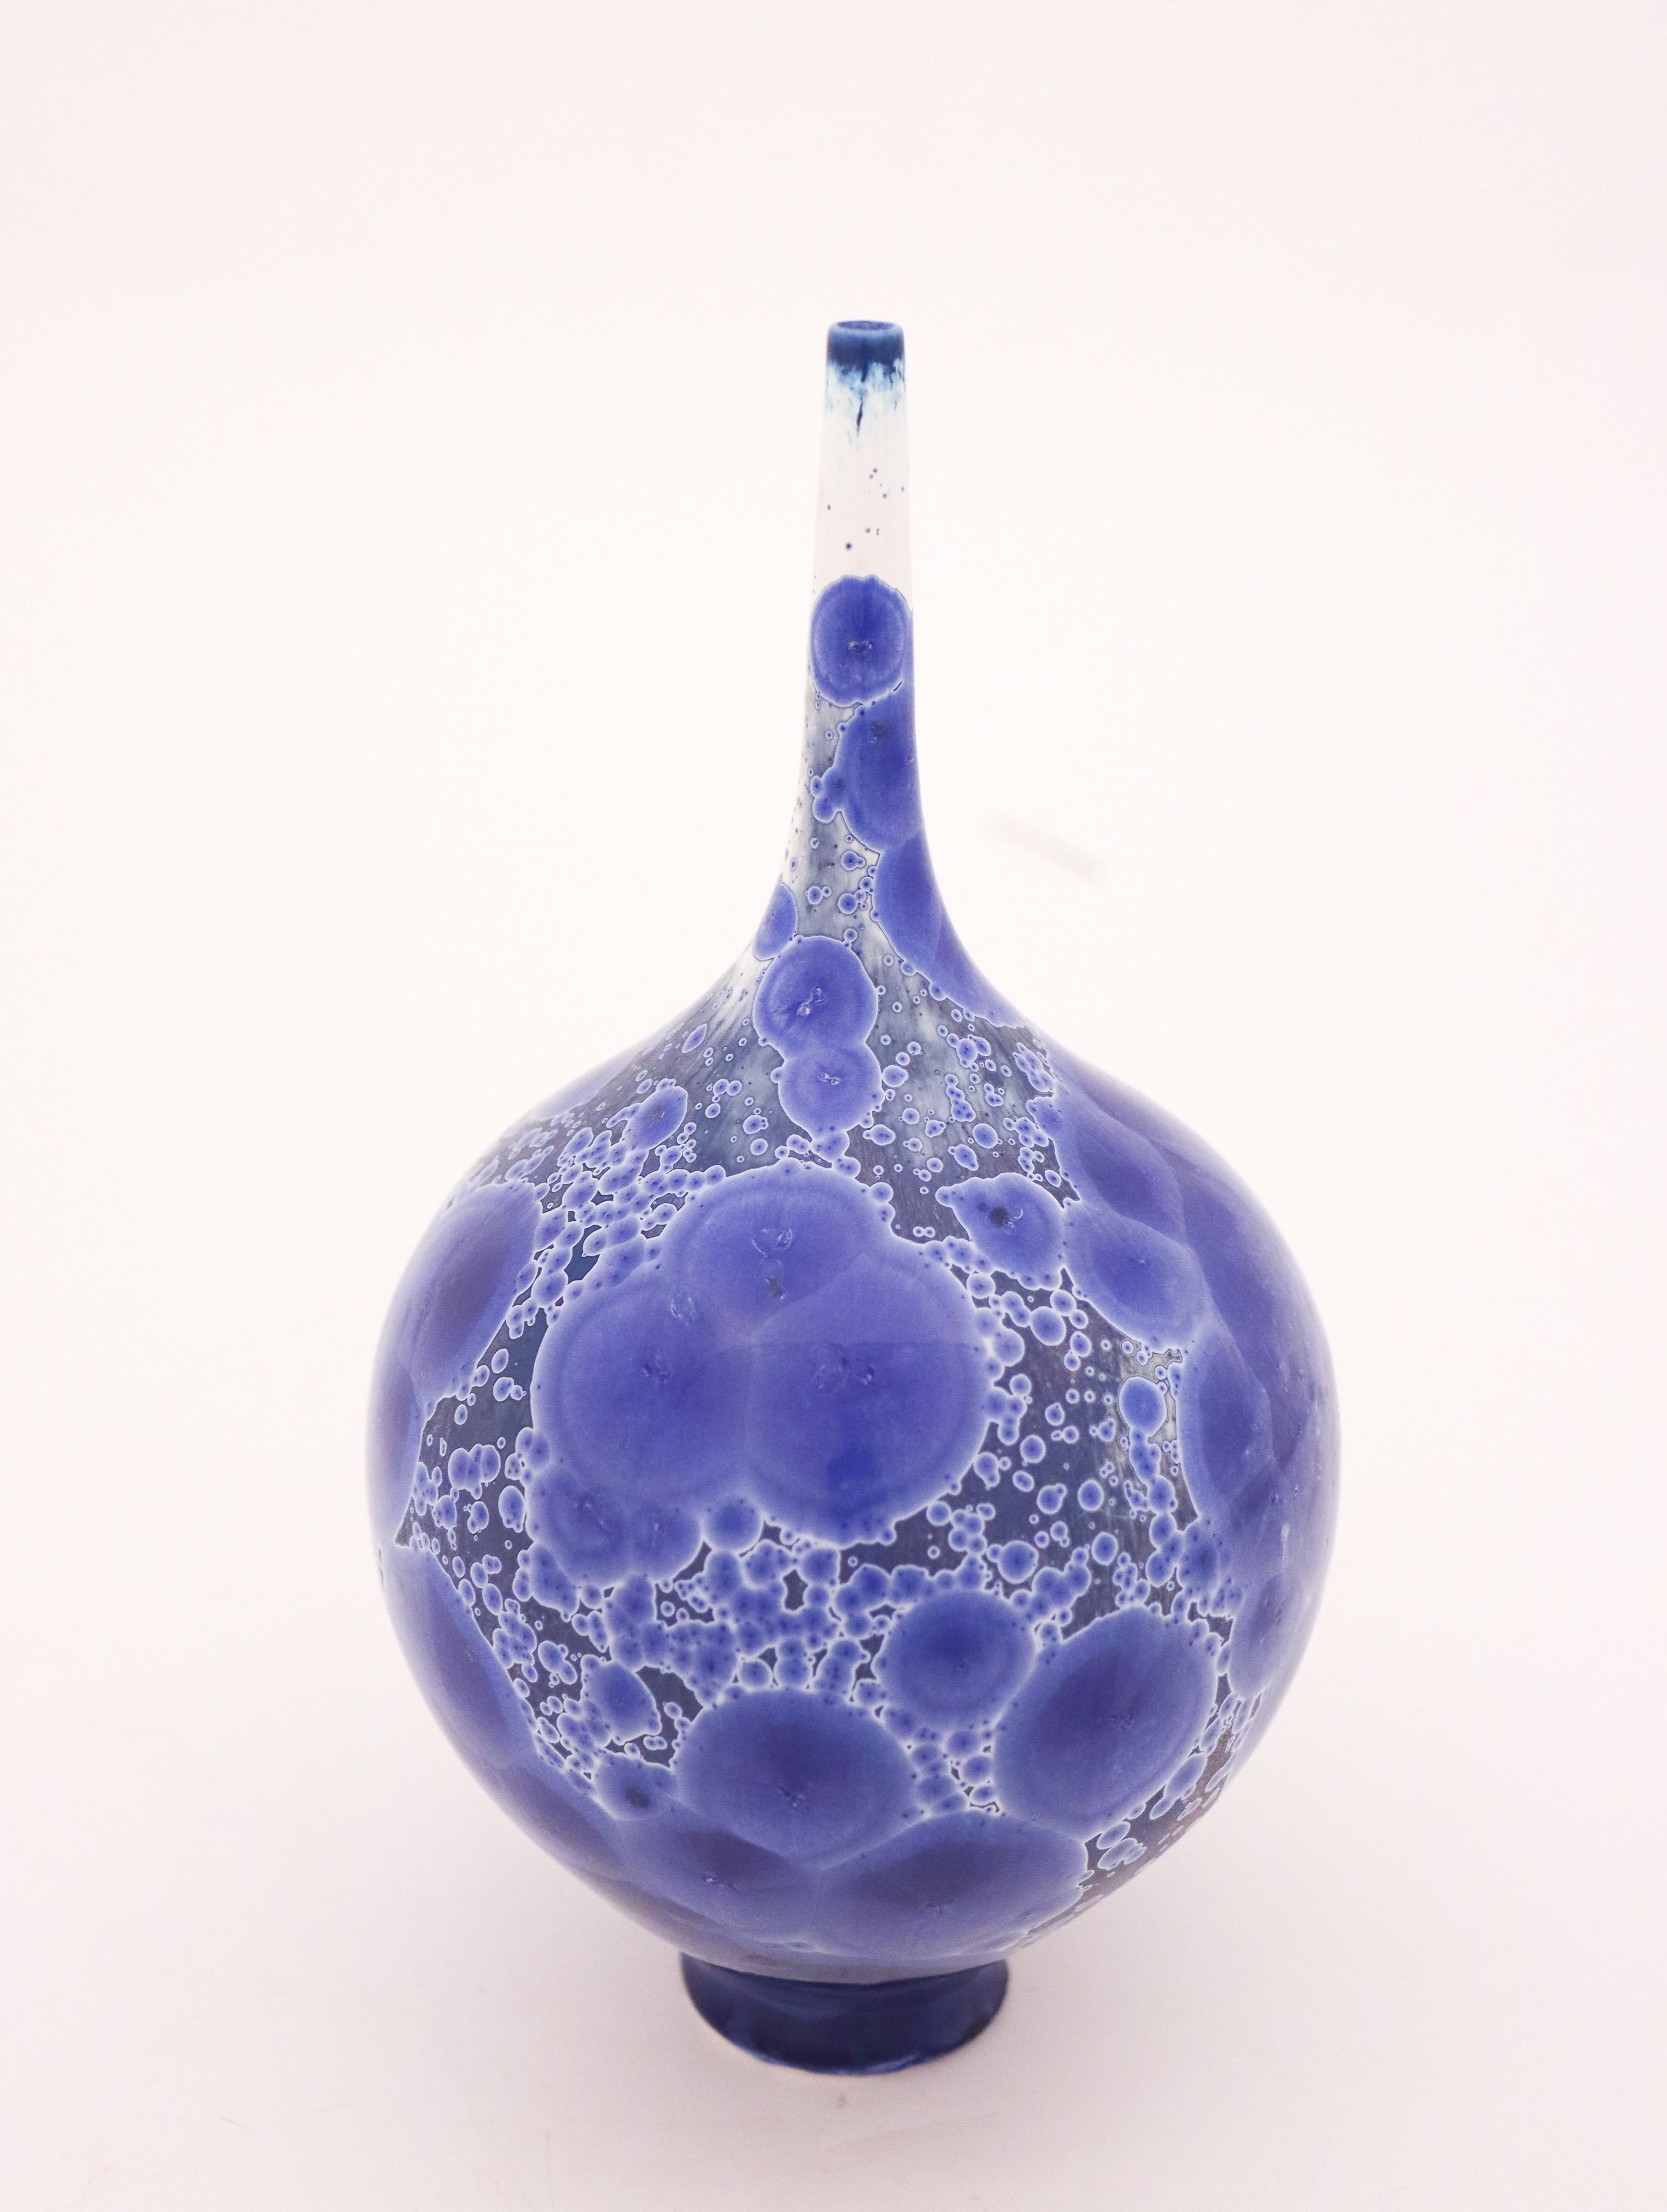 Vase by Isak Isaksson, Blue & White Glaze, Contemporary Swedish Ceramicist 2